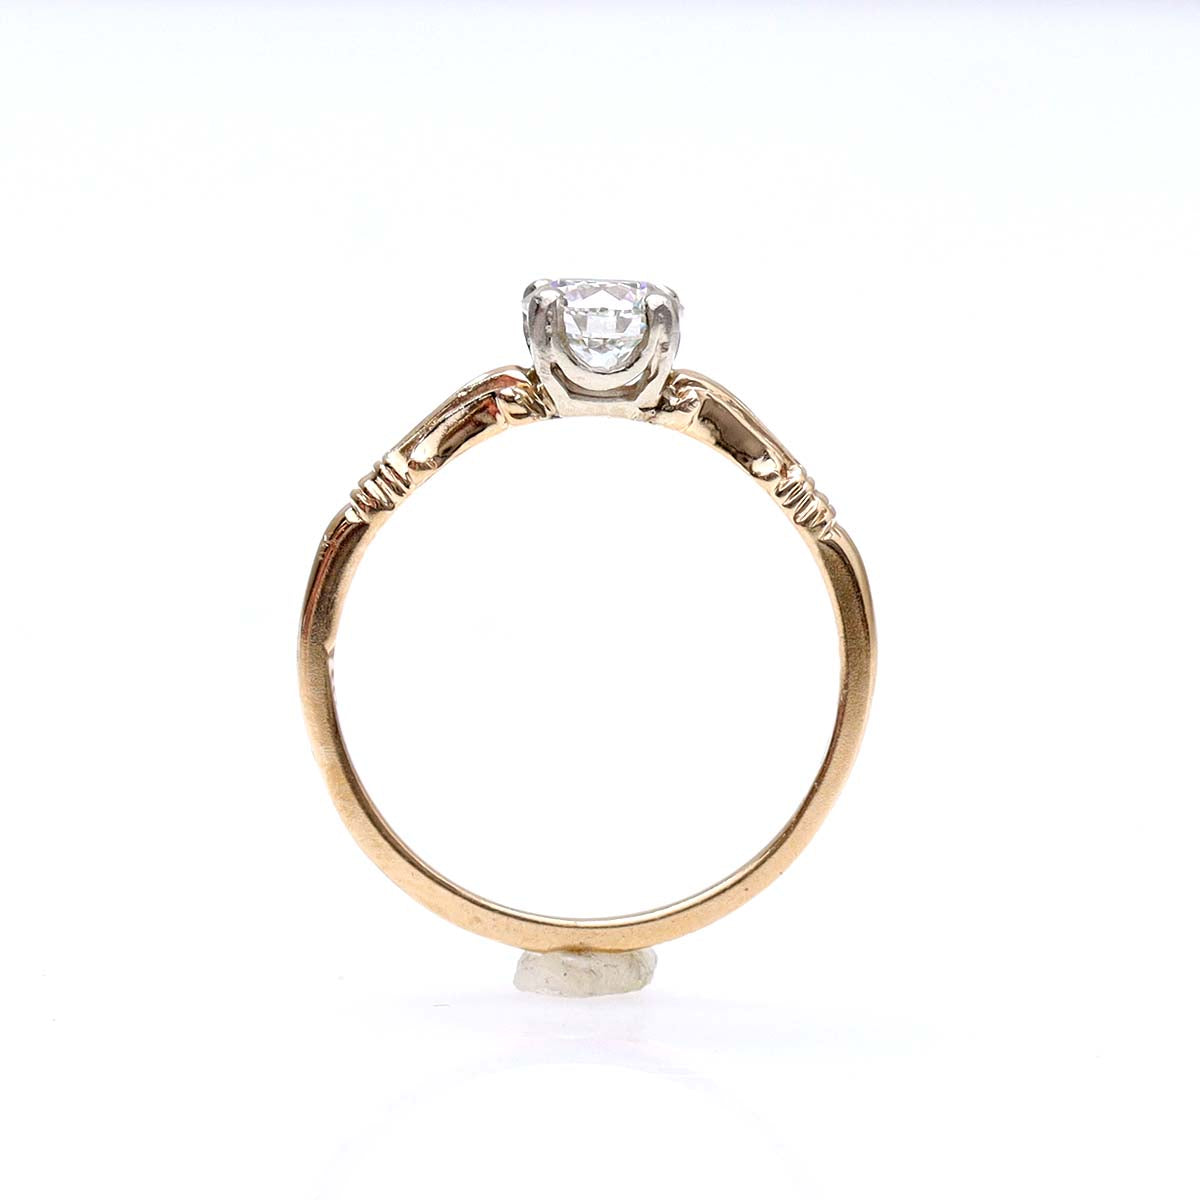 Replica Art Déco Engagement Ring #2591-8